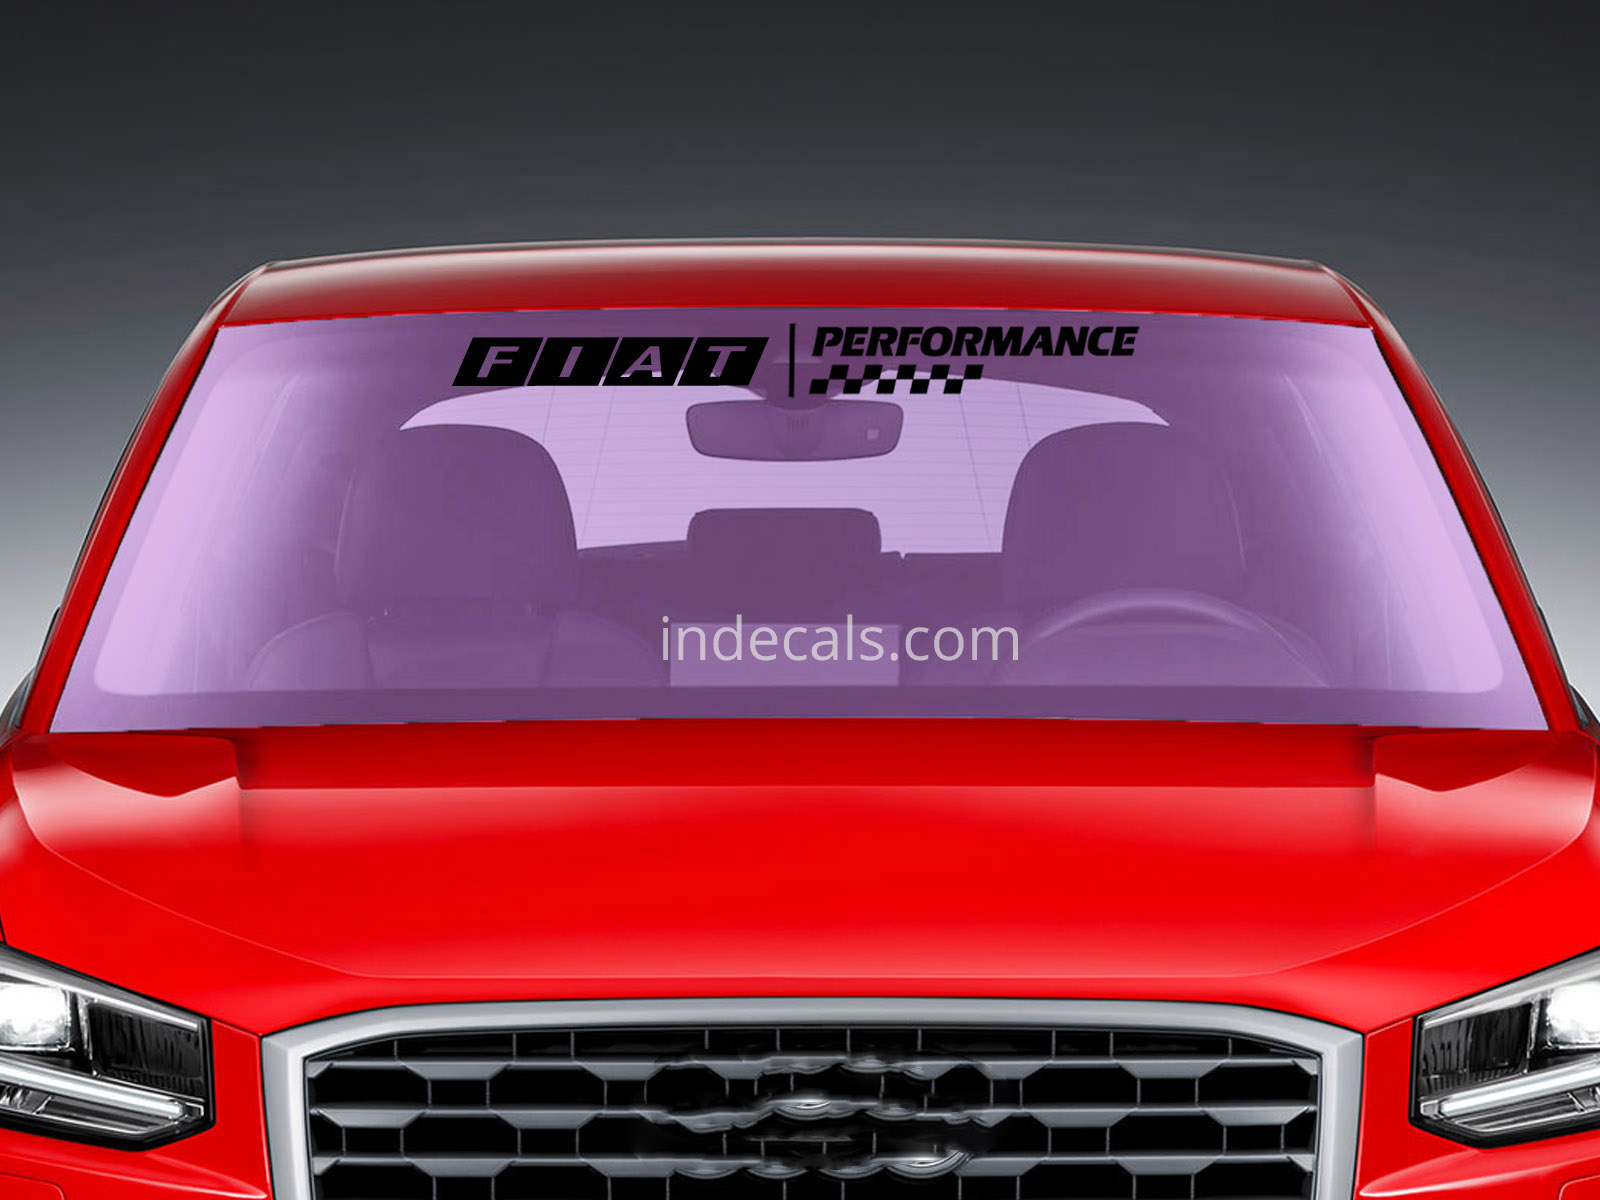 1 x Fiat Performance Sticker for Windshield or Back Window - Black